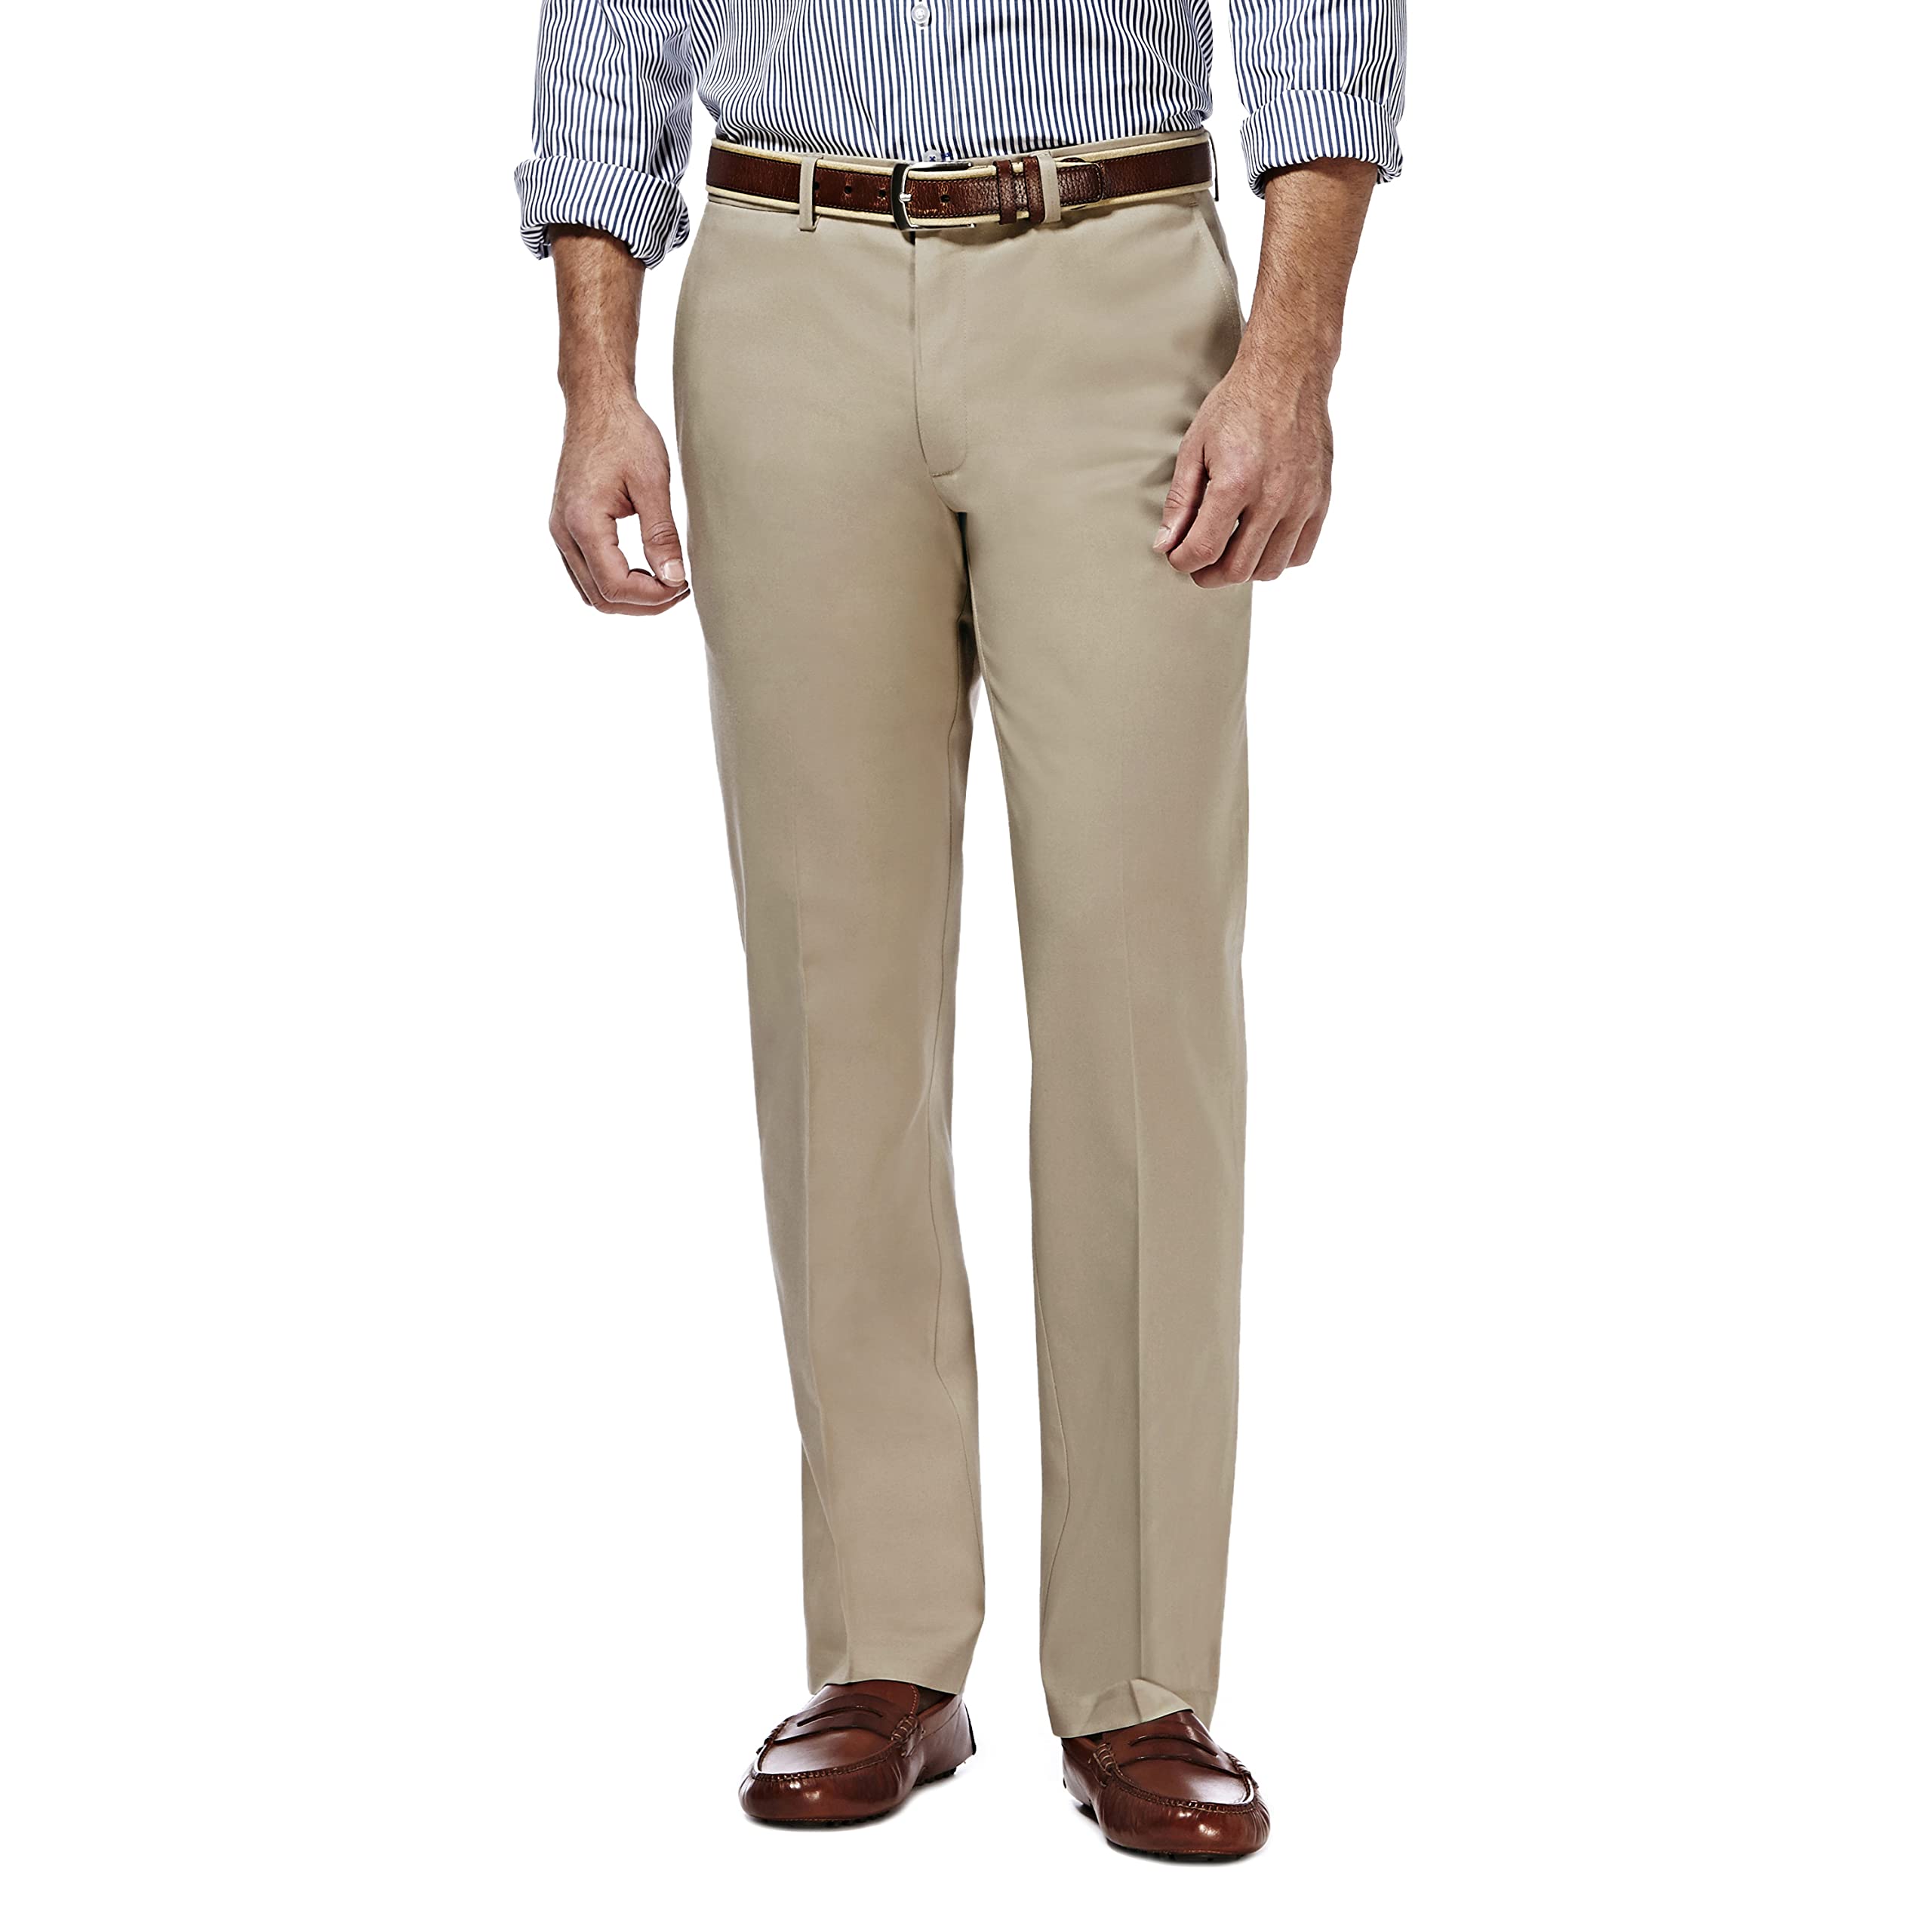 Haggar Men's Premium No Iron Khaki Straight Fit & Slim Fit Flat Front  Casual Pant, British Khaki, 30W x 30L at Amazon Men's Clothing store